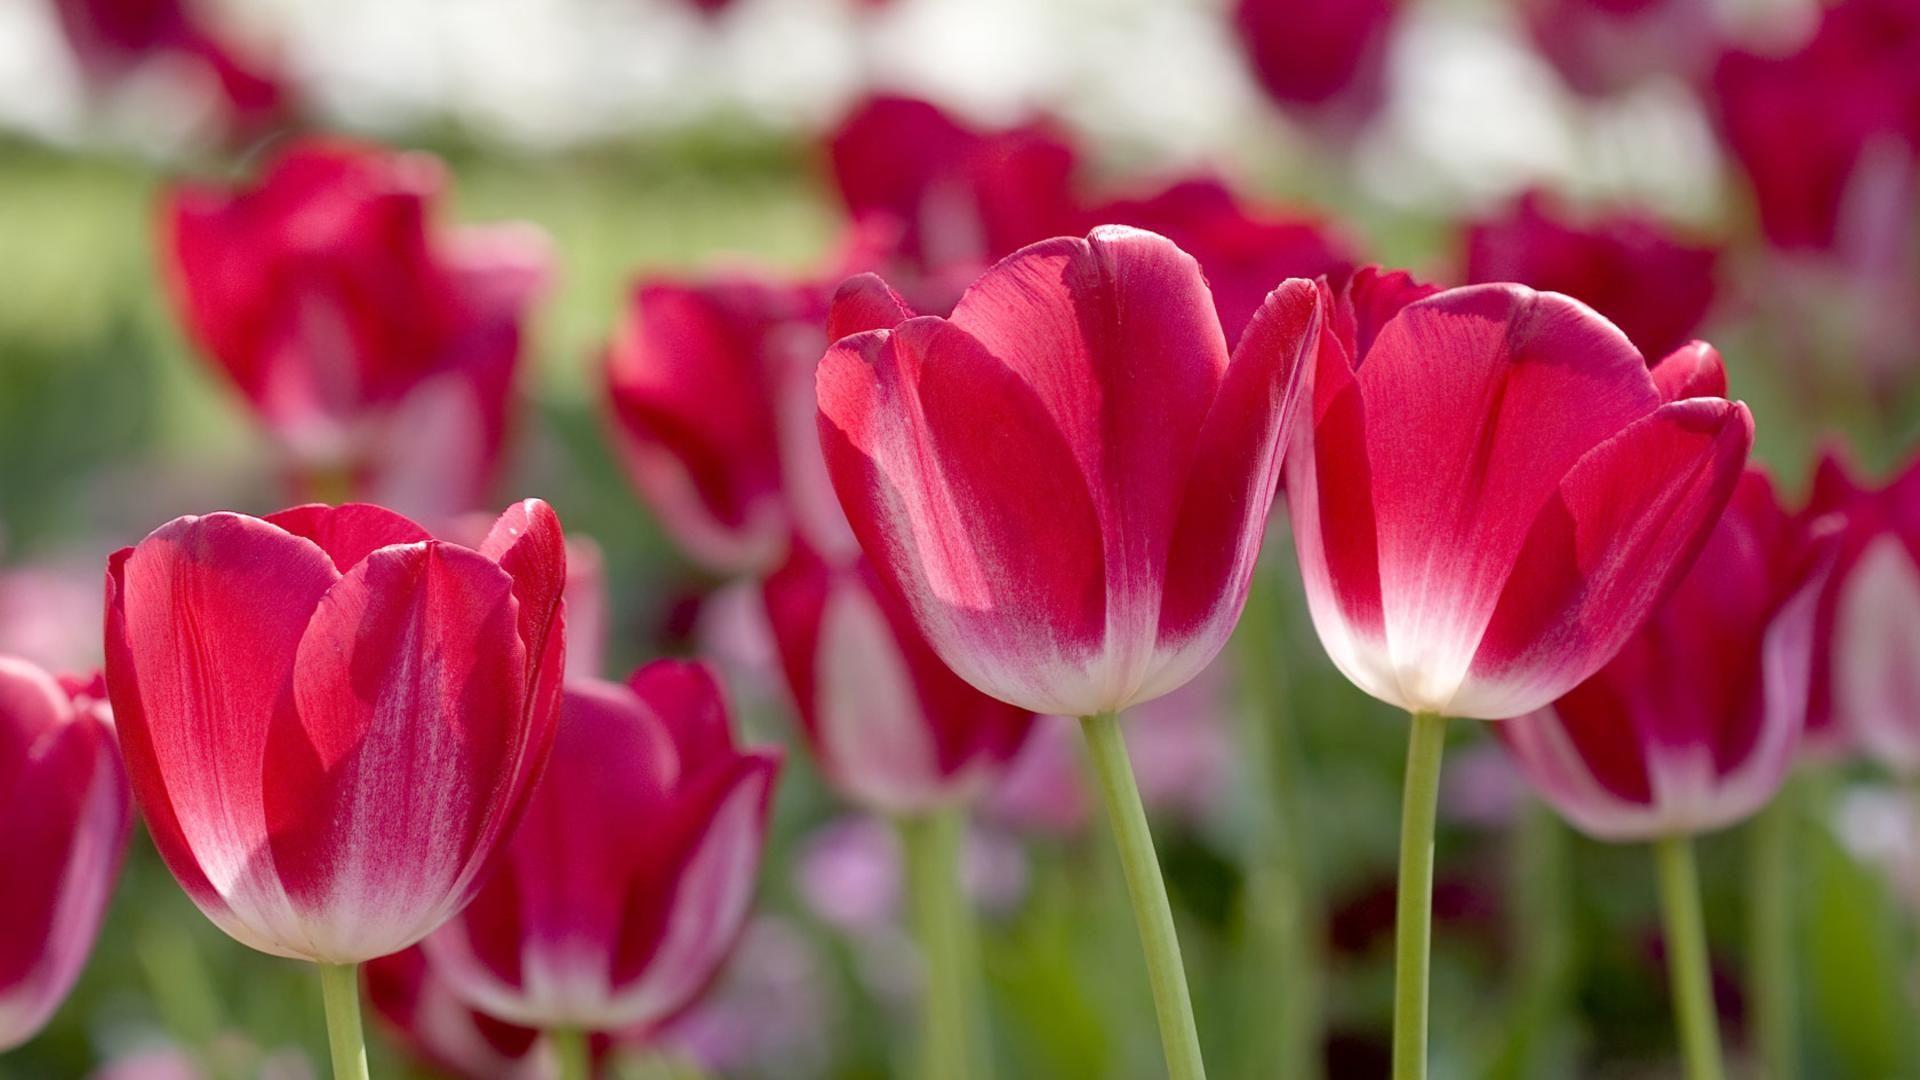 Red tulips spring flowering free desktop background